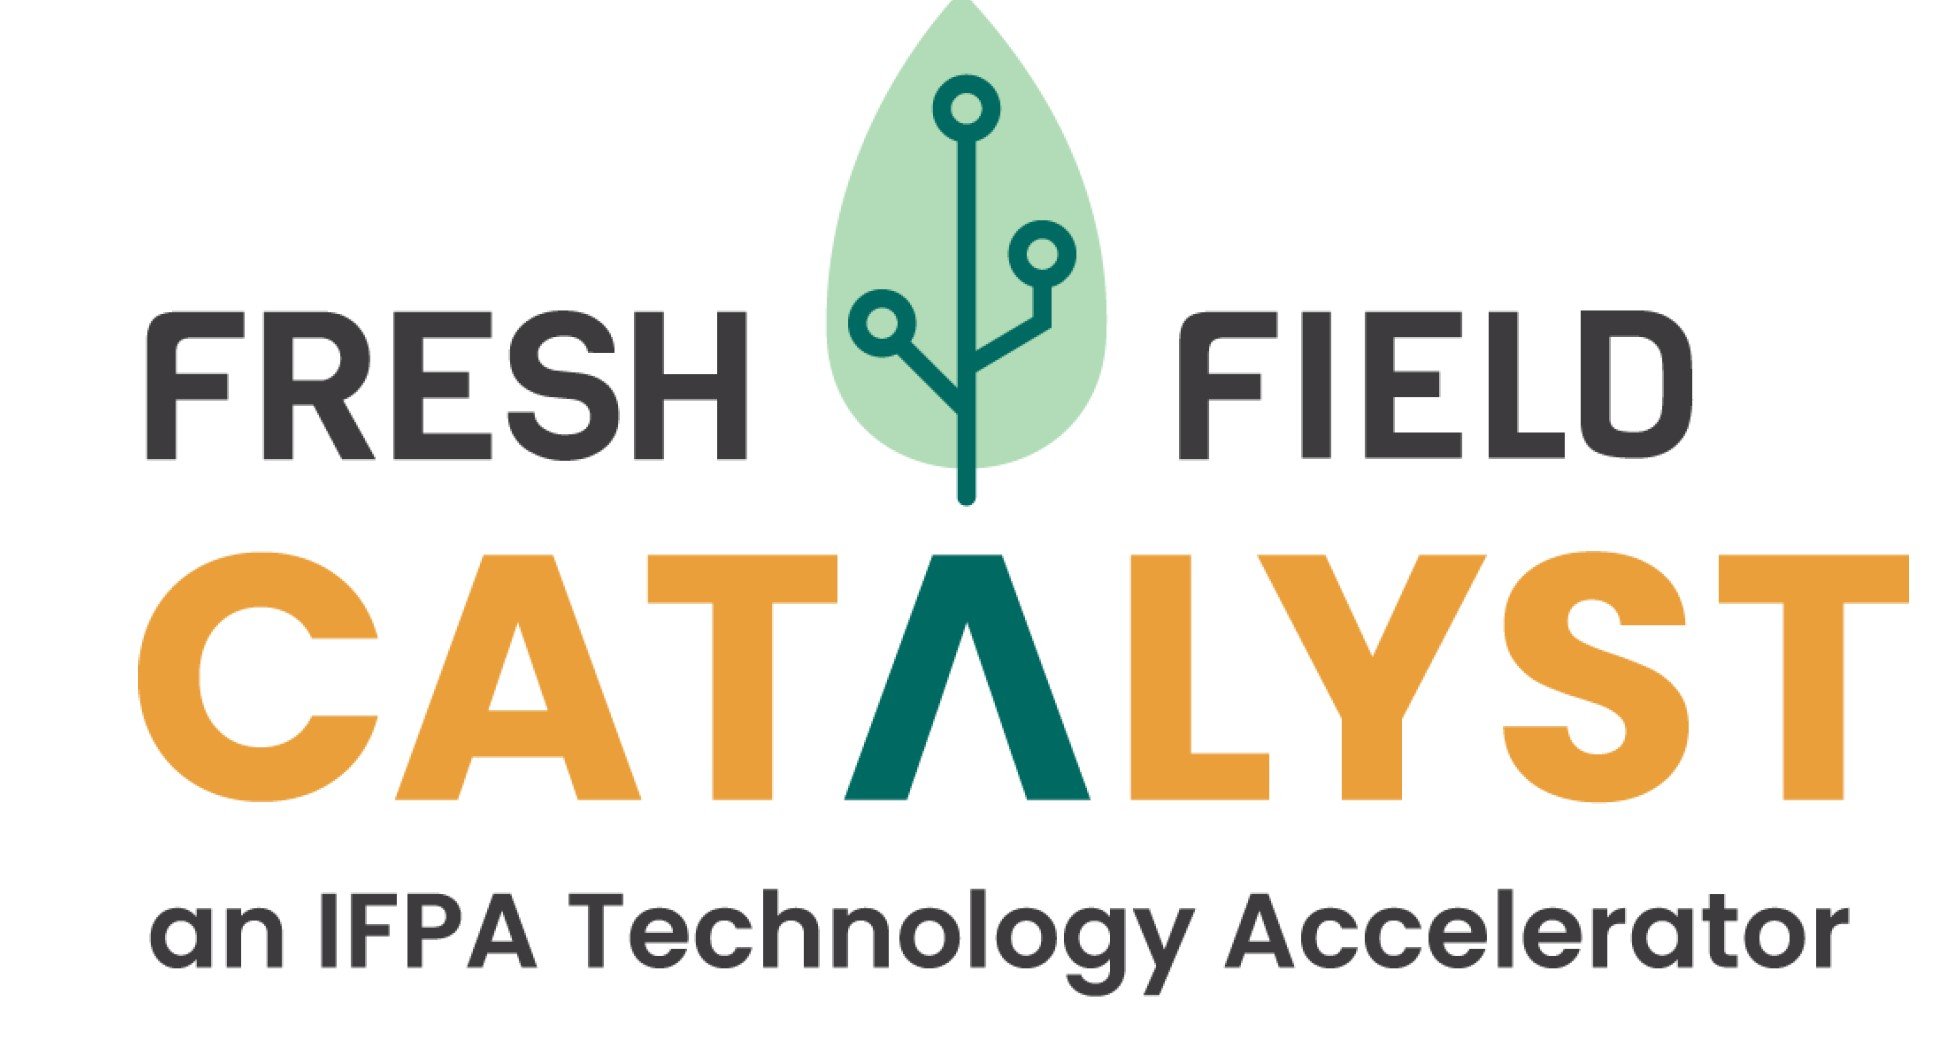 Fresh Field Catalyst logo an IFPA Technology Accelerator